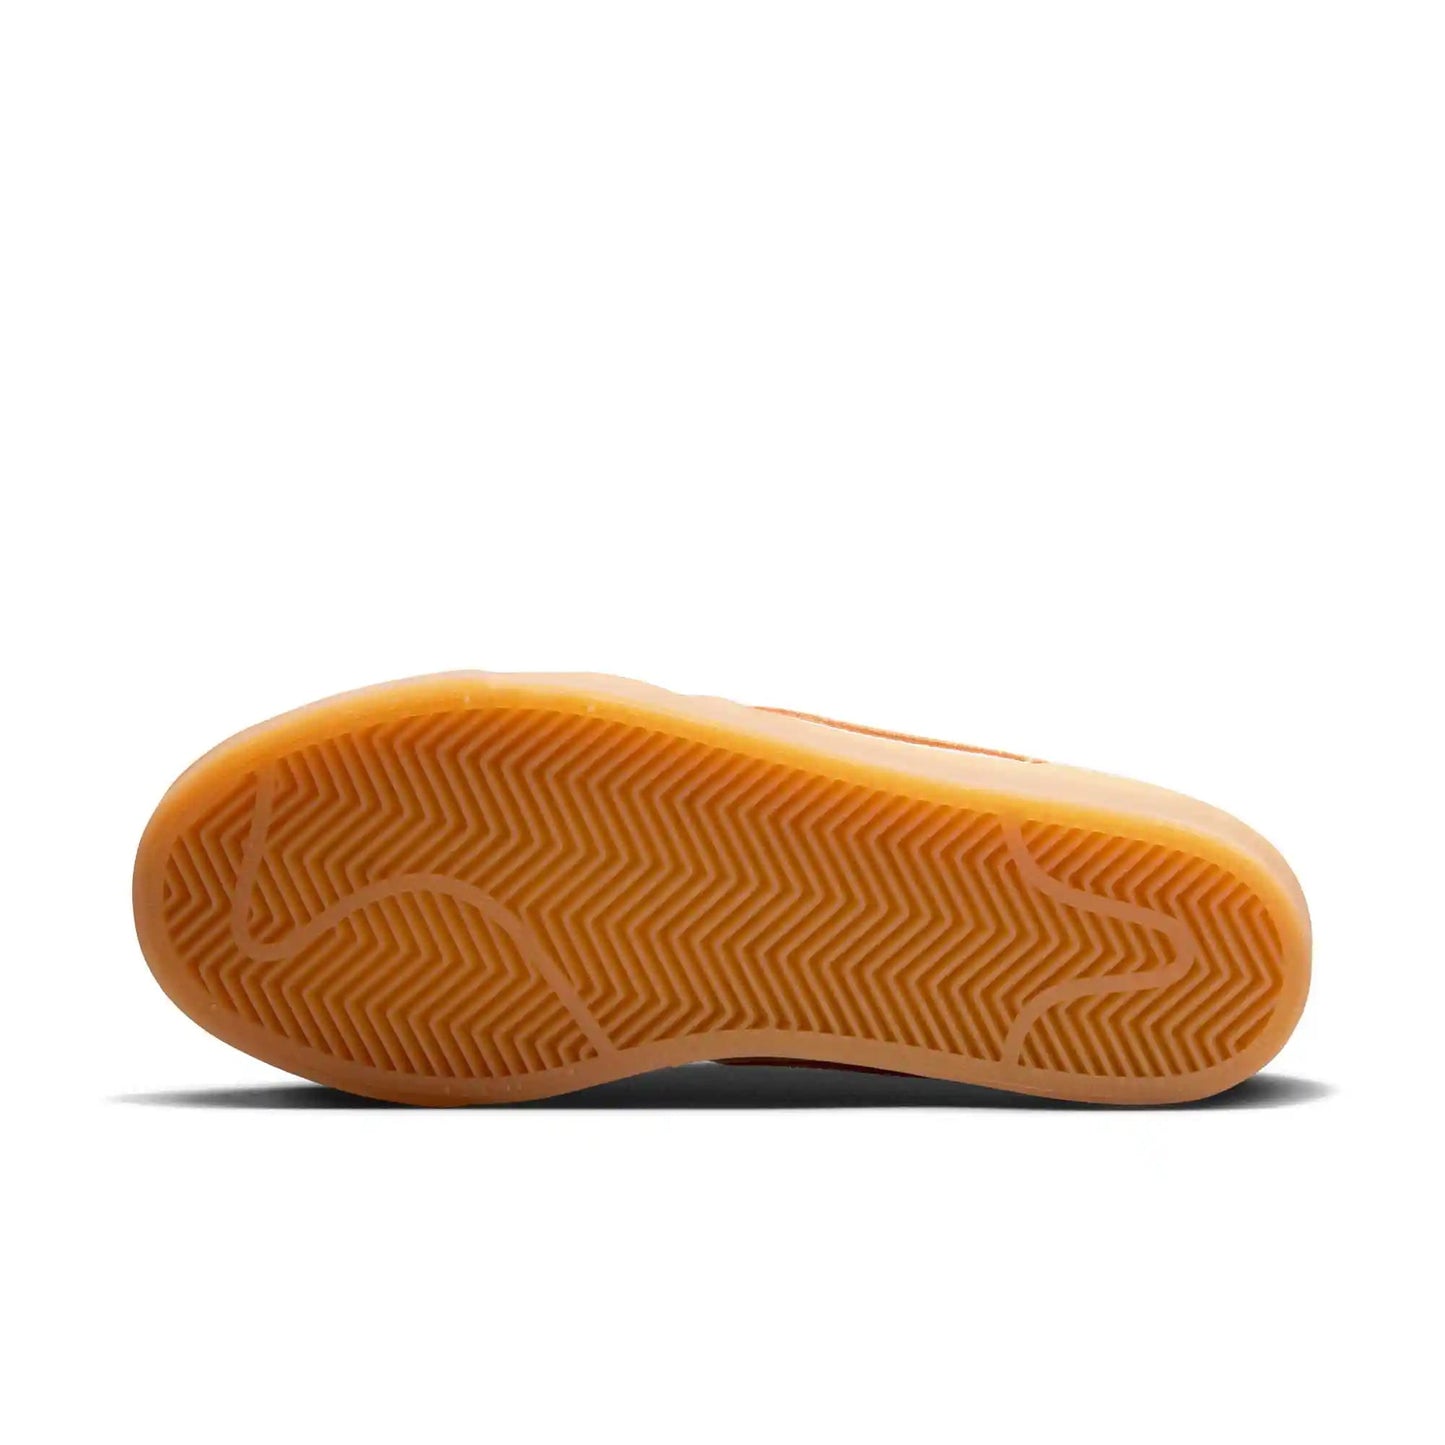 Nike SB Zoom Pogo Plus Premium, summit white/bright mandarin - Tiki Room Skateboards - 6